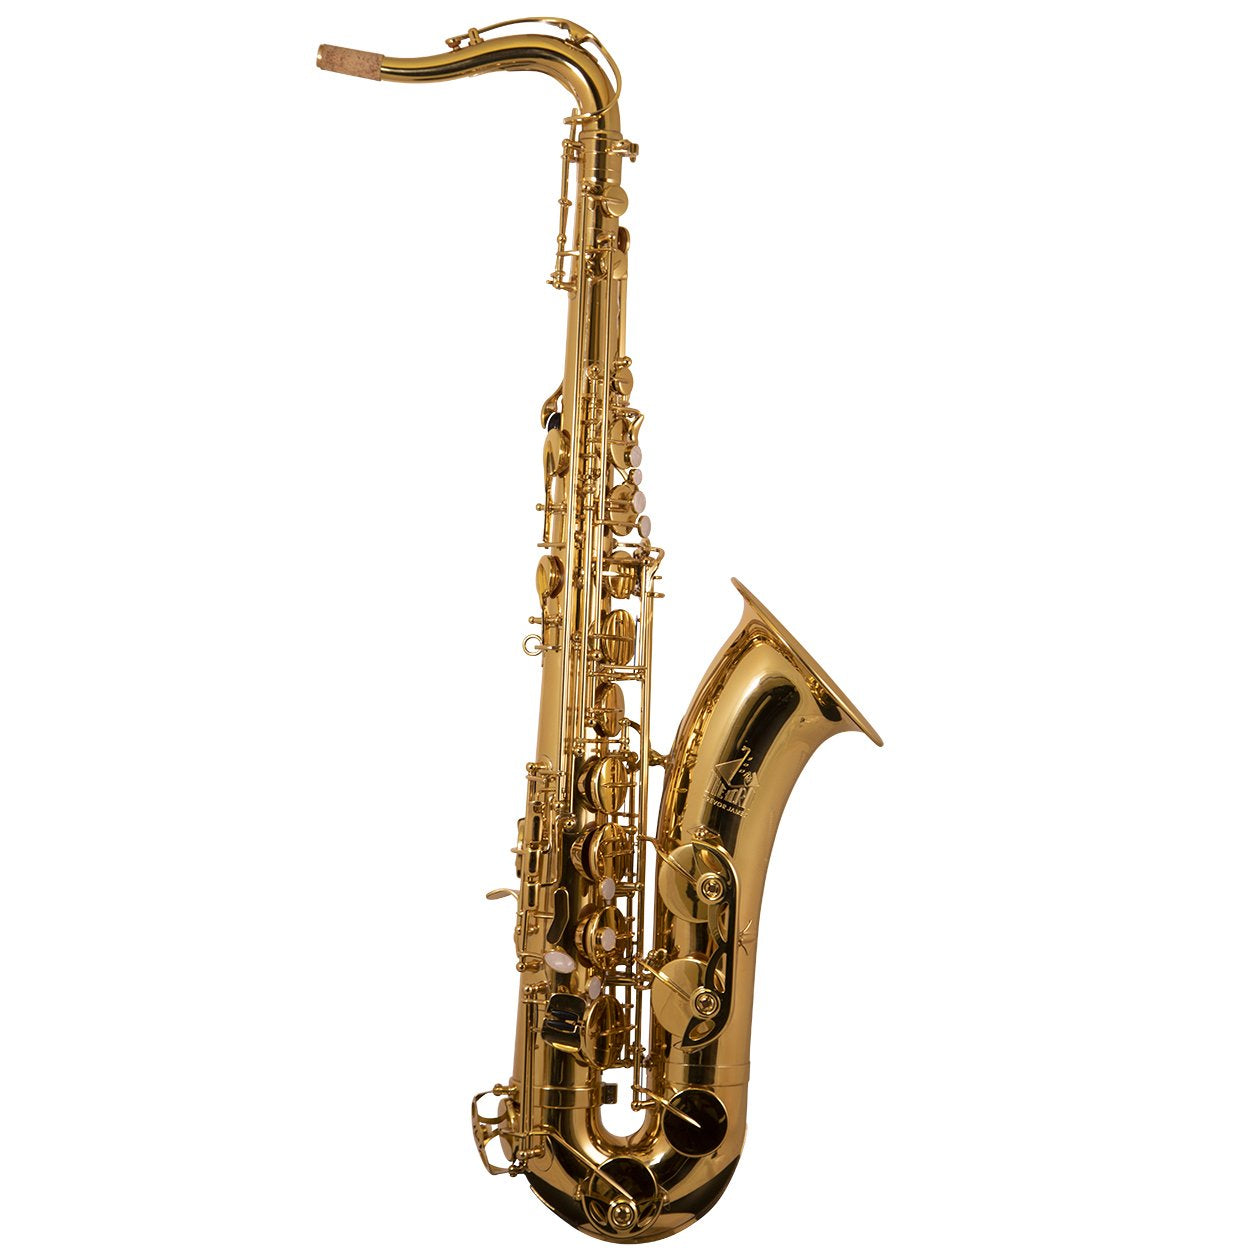 Trevor James - "The Horn" Tenor Saxophone-Saxophone-Trevor James-Music Elements